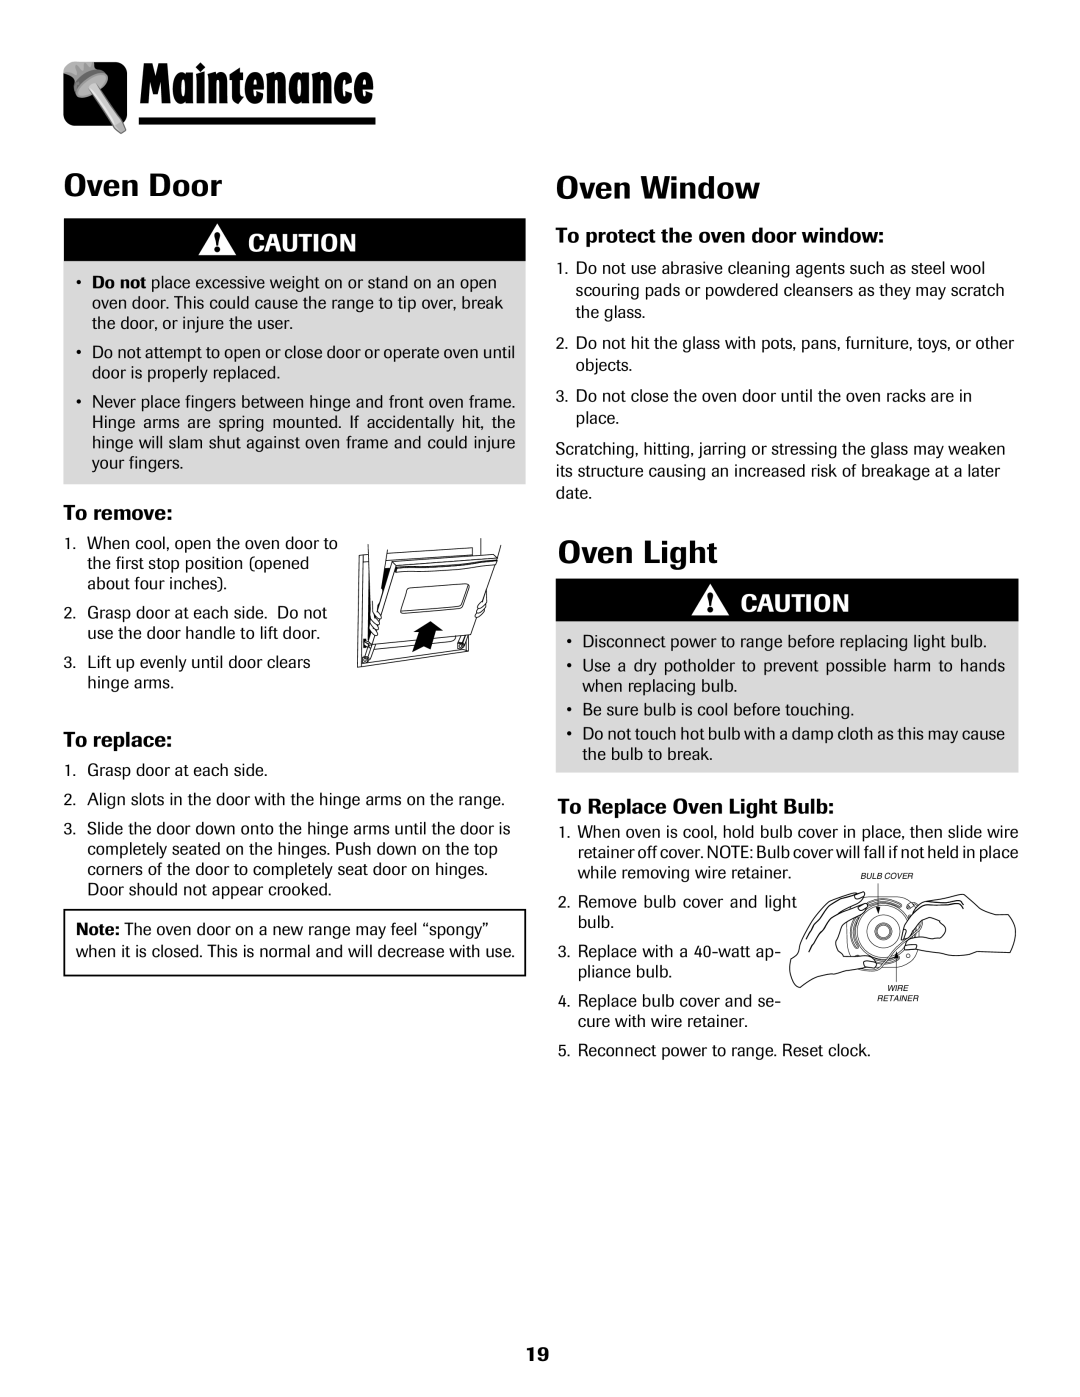 Amana Coil Maintenance, Oven Door, Oven Window, To protect the oven door window, To Replace Oven Light Bulb, To remove 